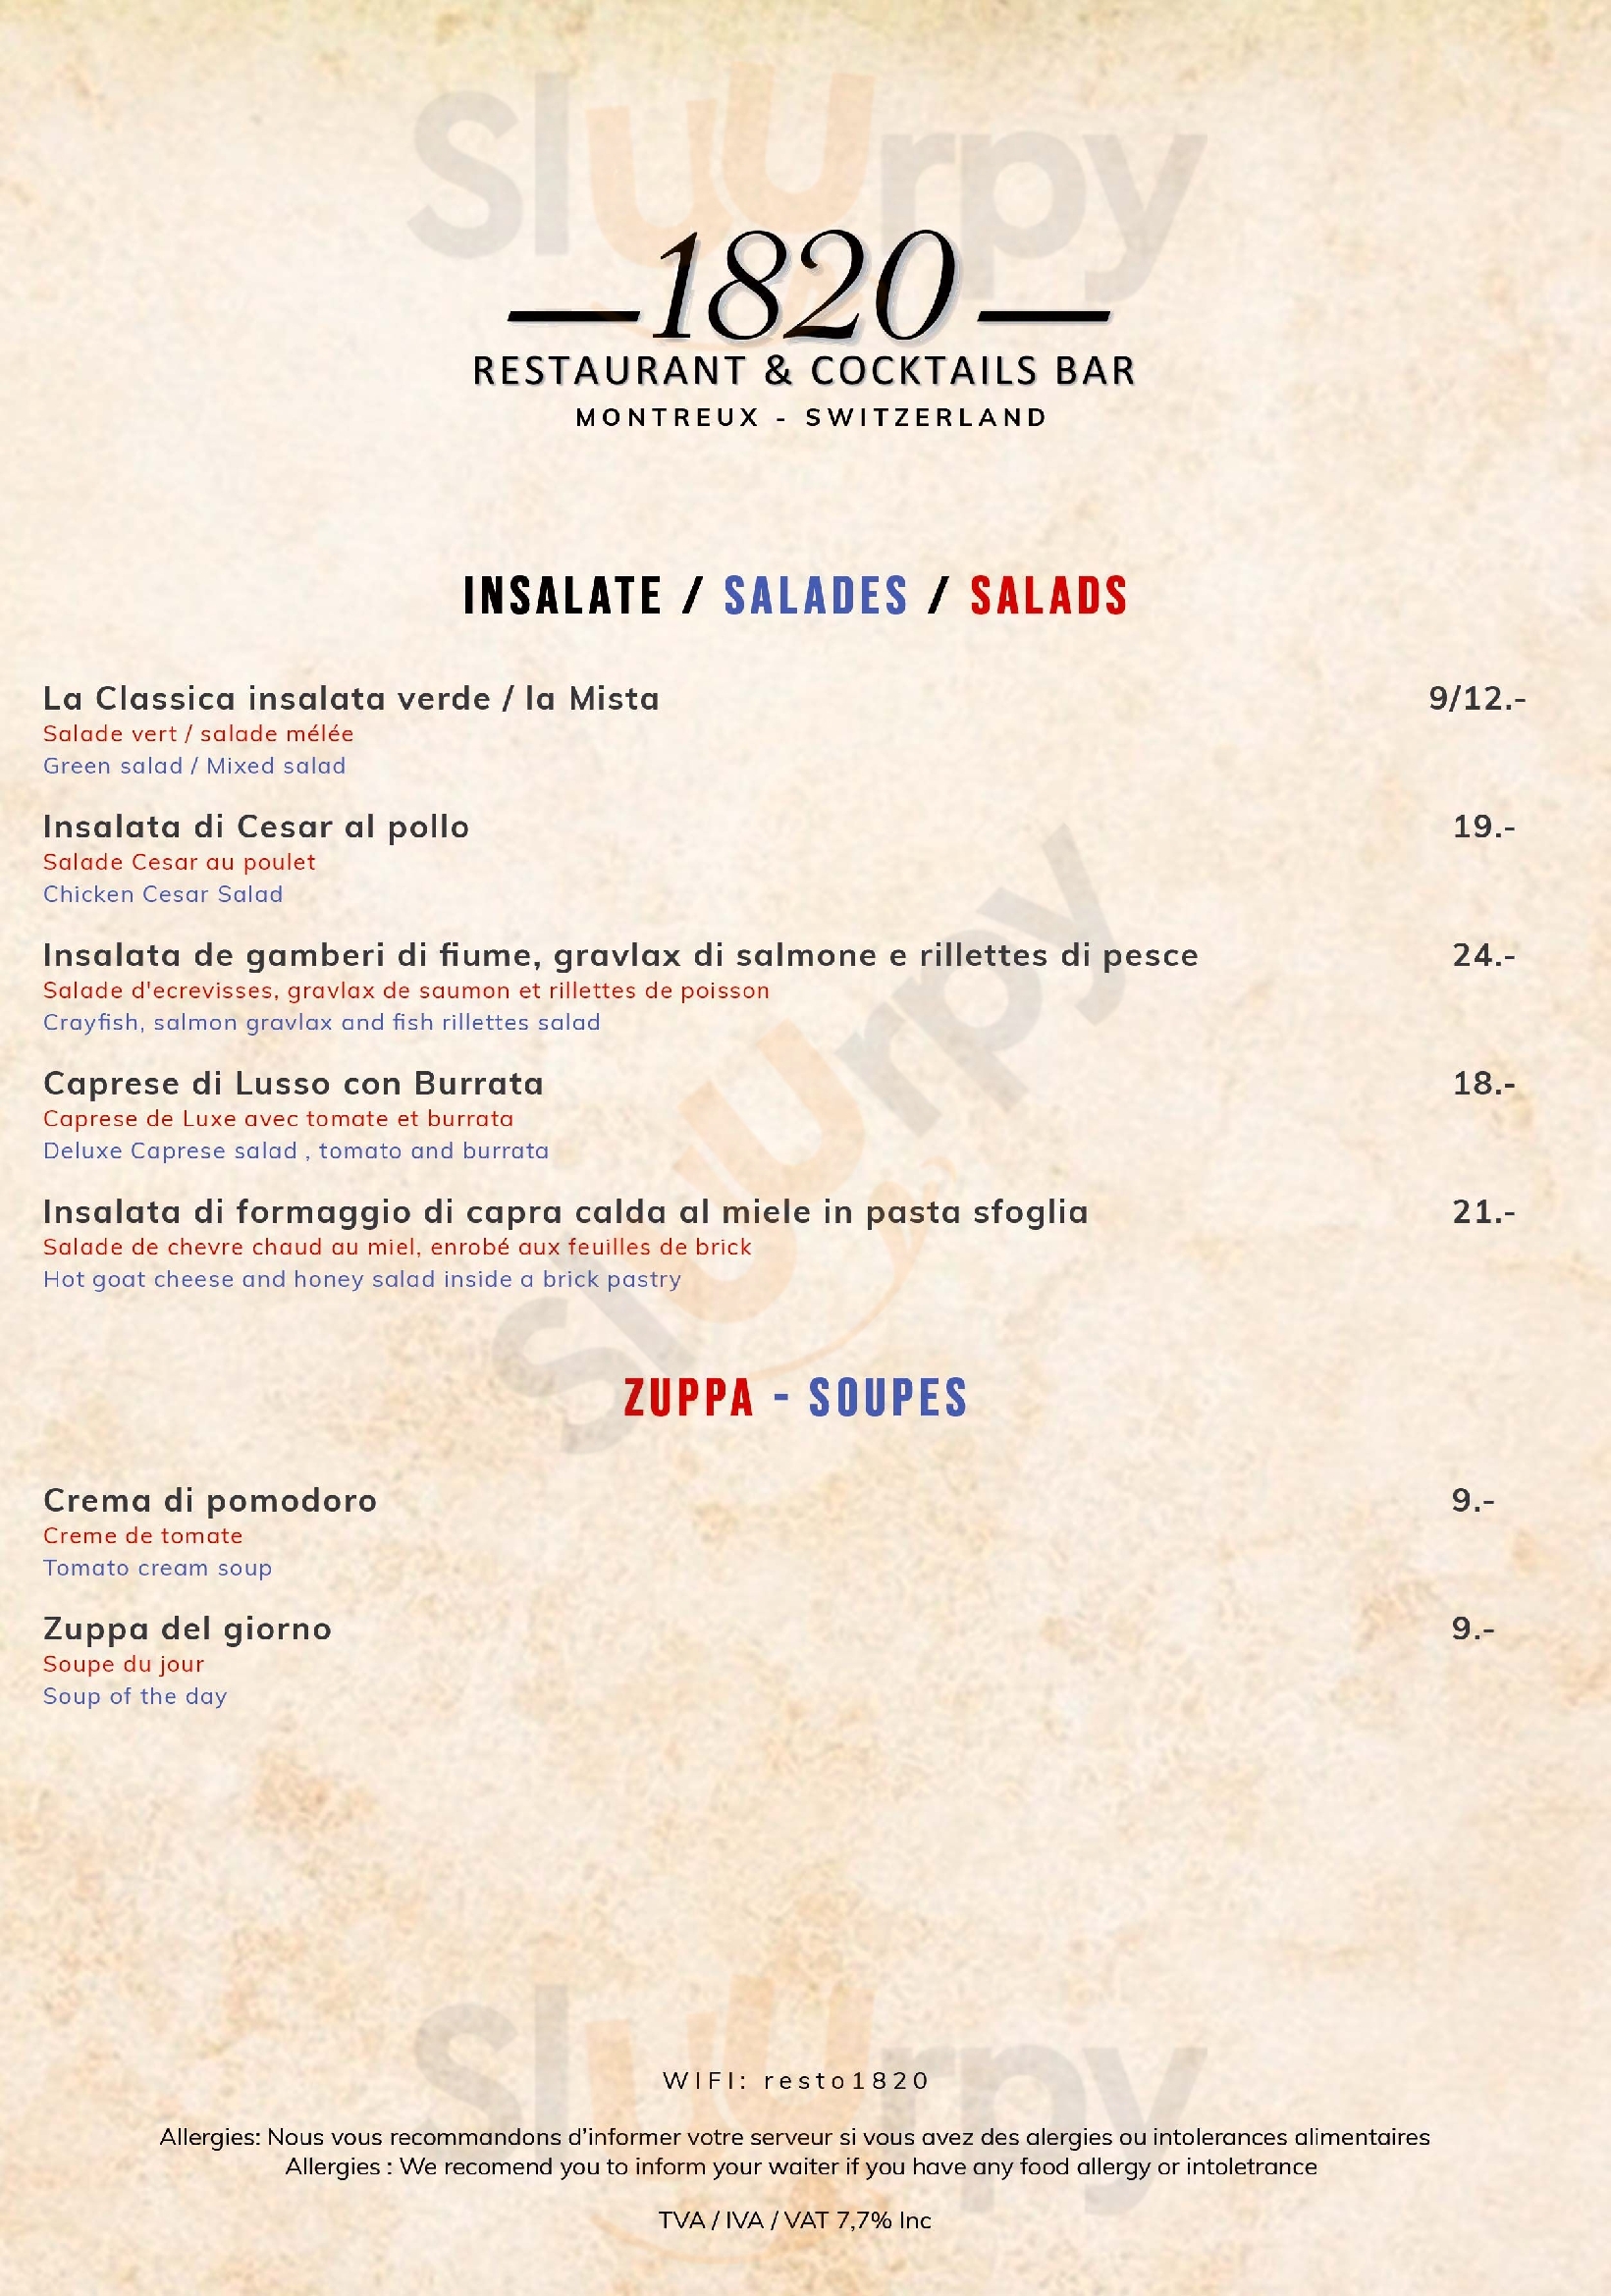 1820 Restaurant & Cocktails Bar Montreux Menu - 1